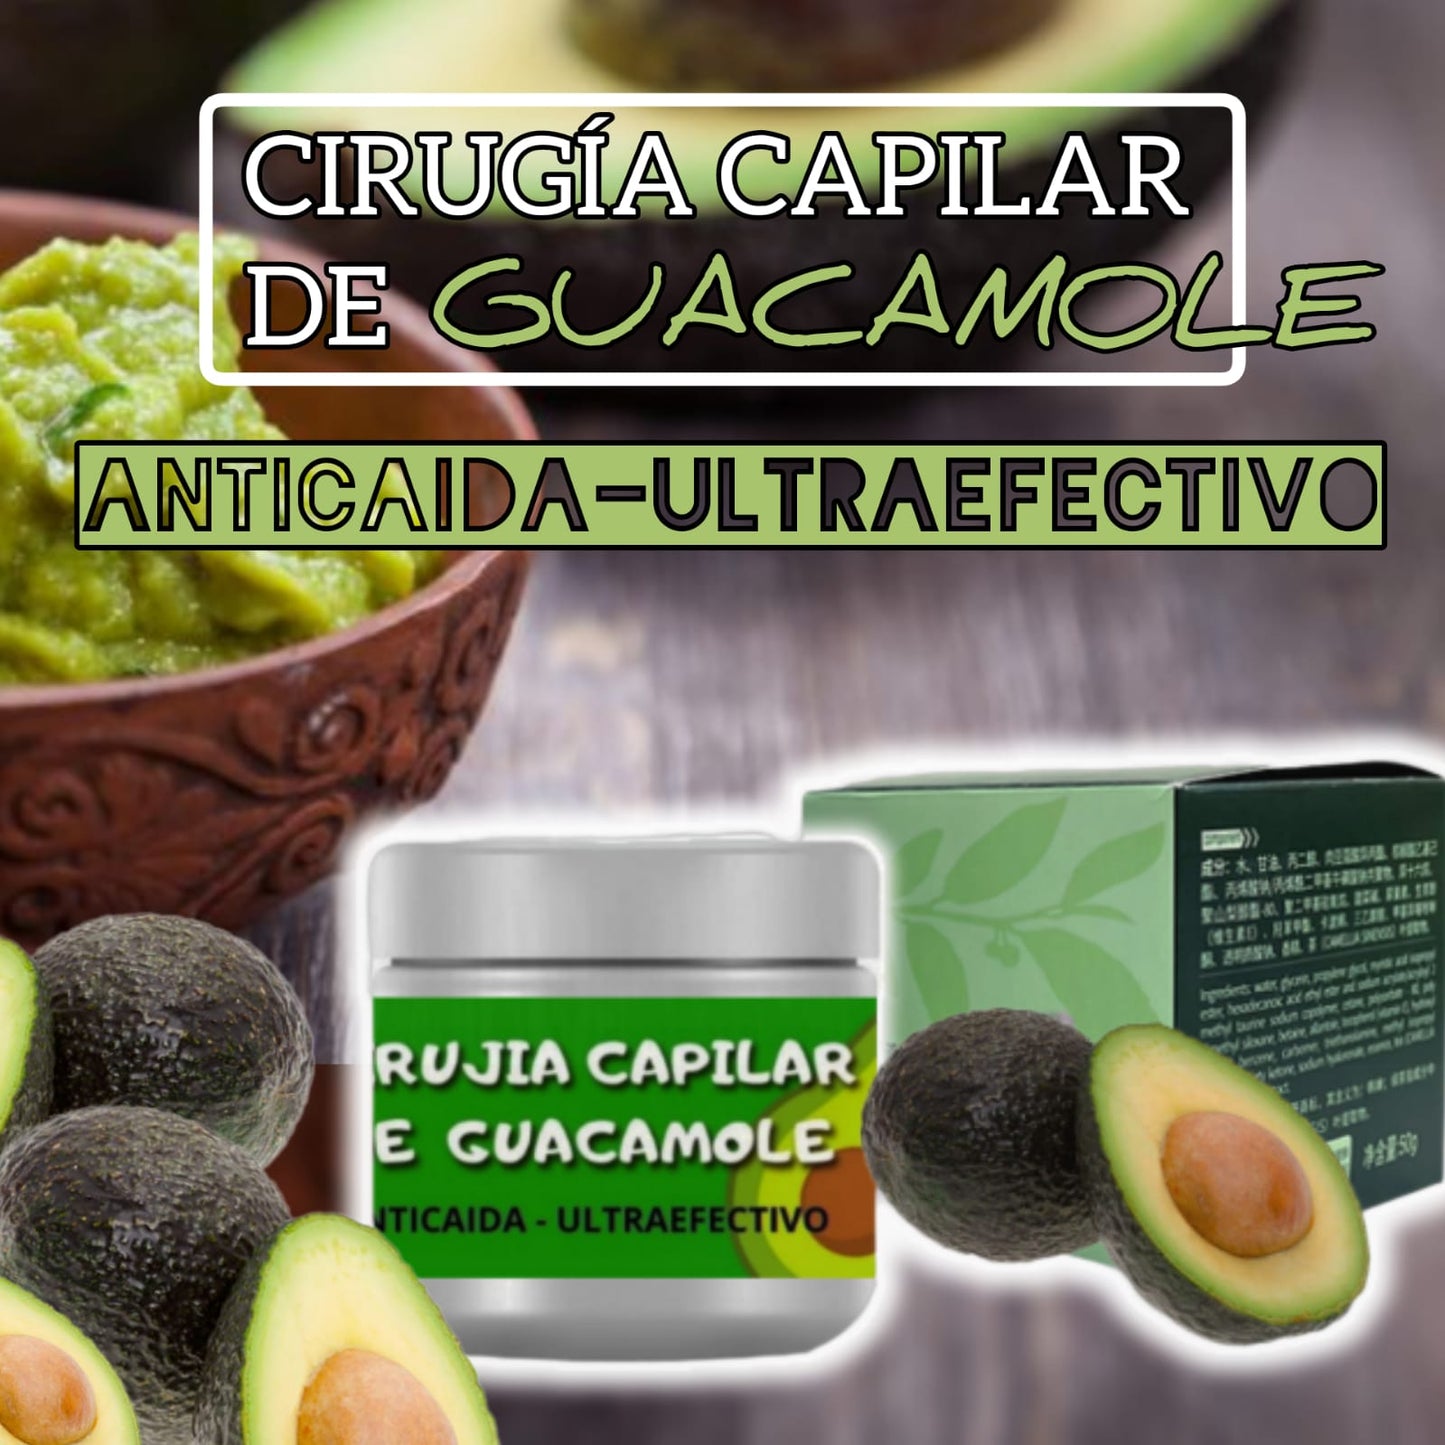 CIRUGÍA CAPILAR DE GUACAMOLE® ANTICAIDA-ULTRAEFECTIVO (Pague 1, lleve 2 ) ⭐⭐⭐⭐⭐